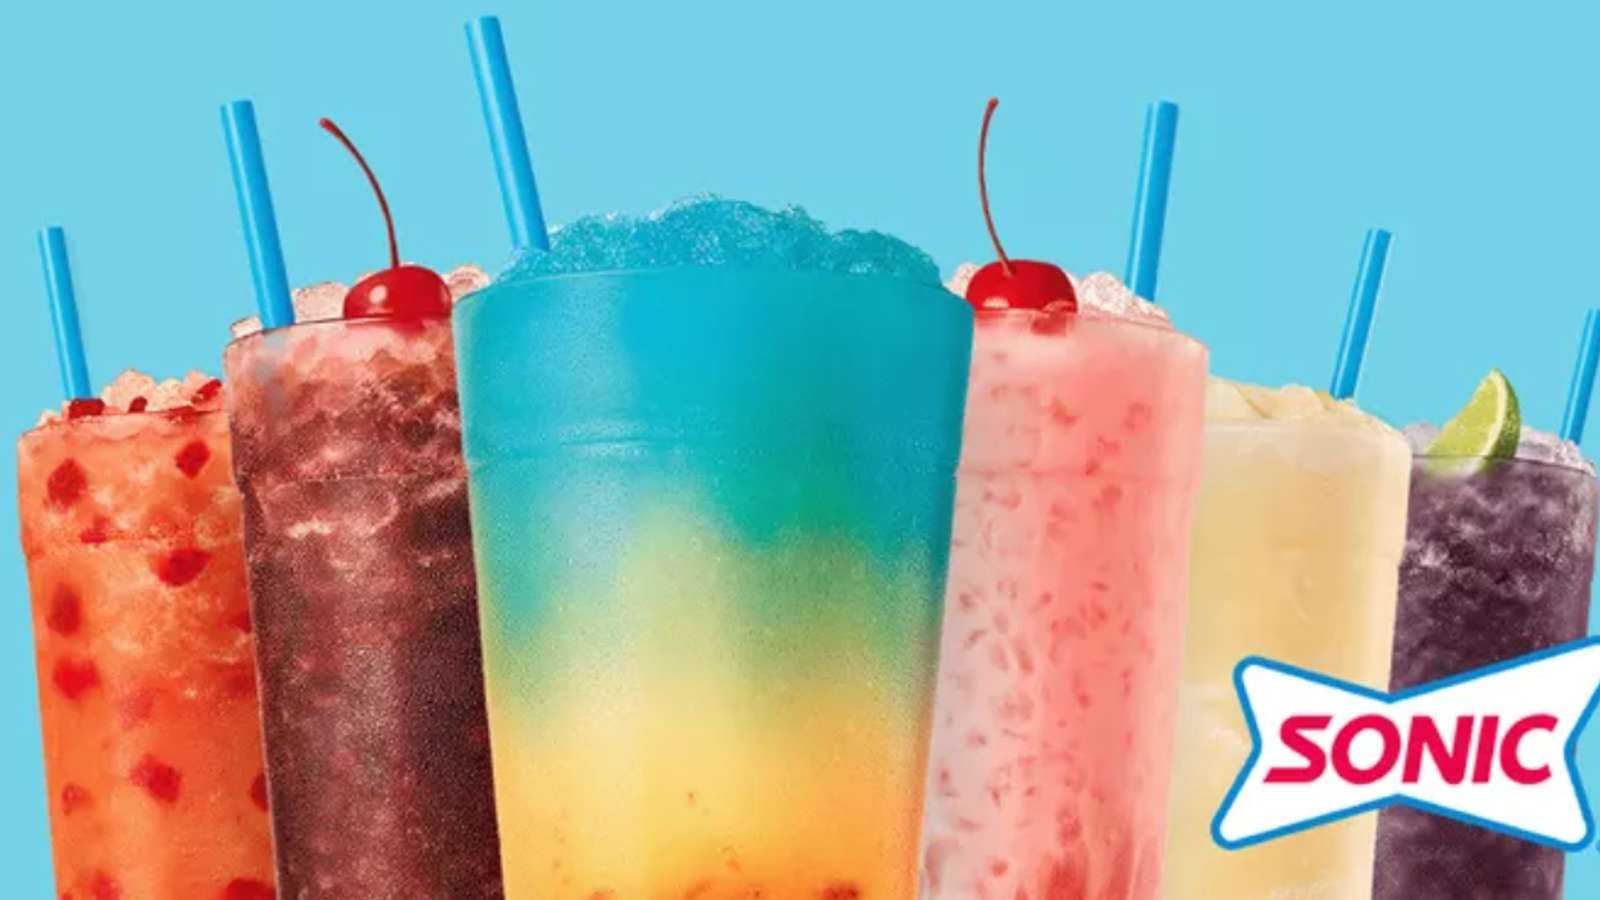 Sonic summer drink lineup